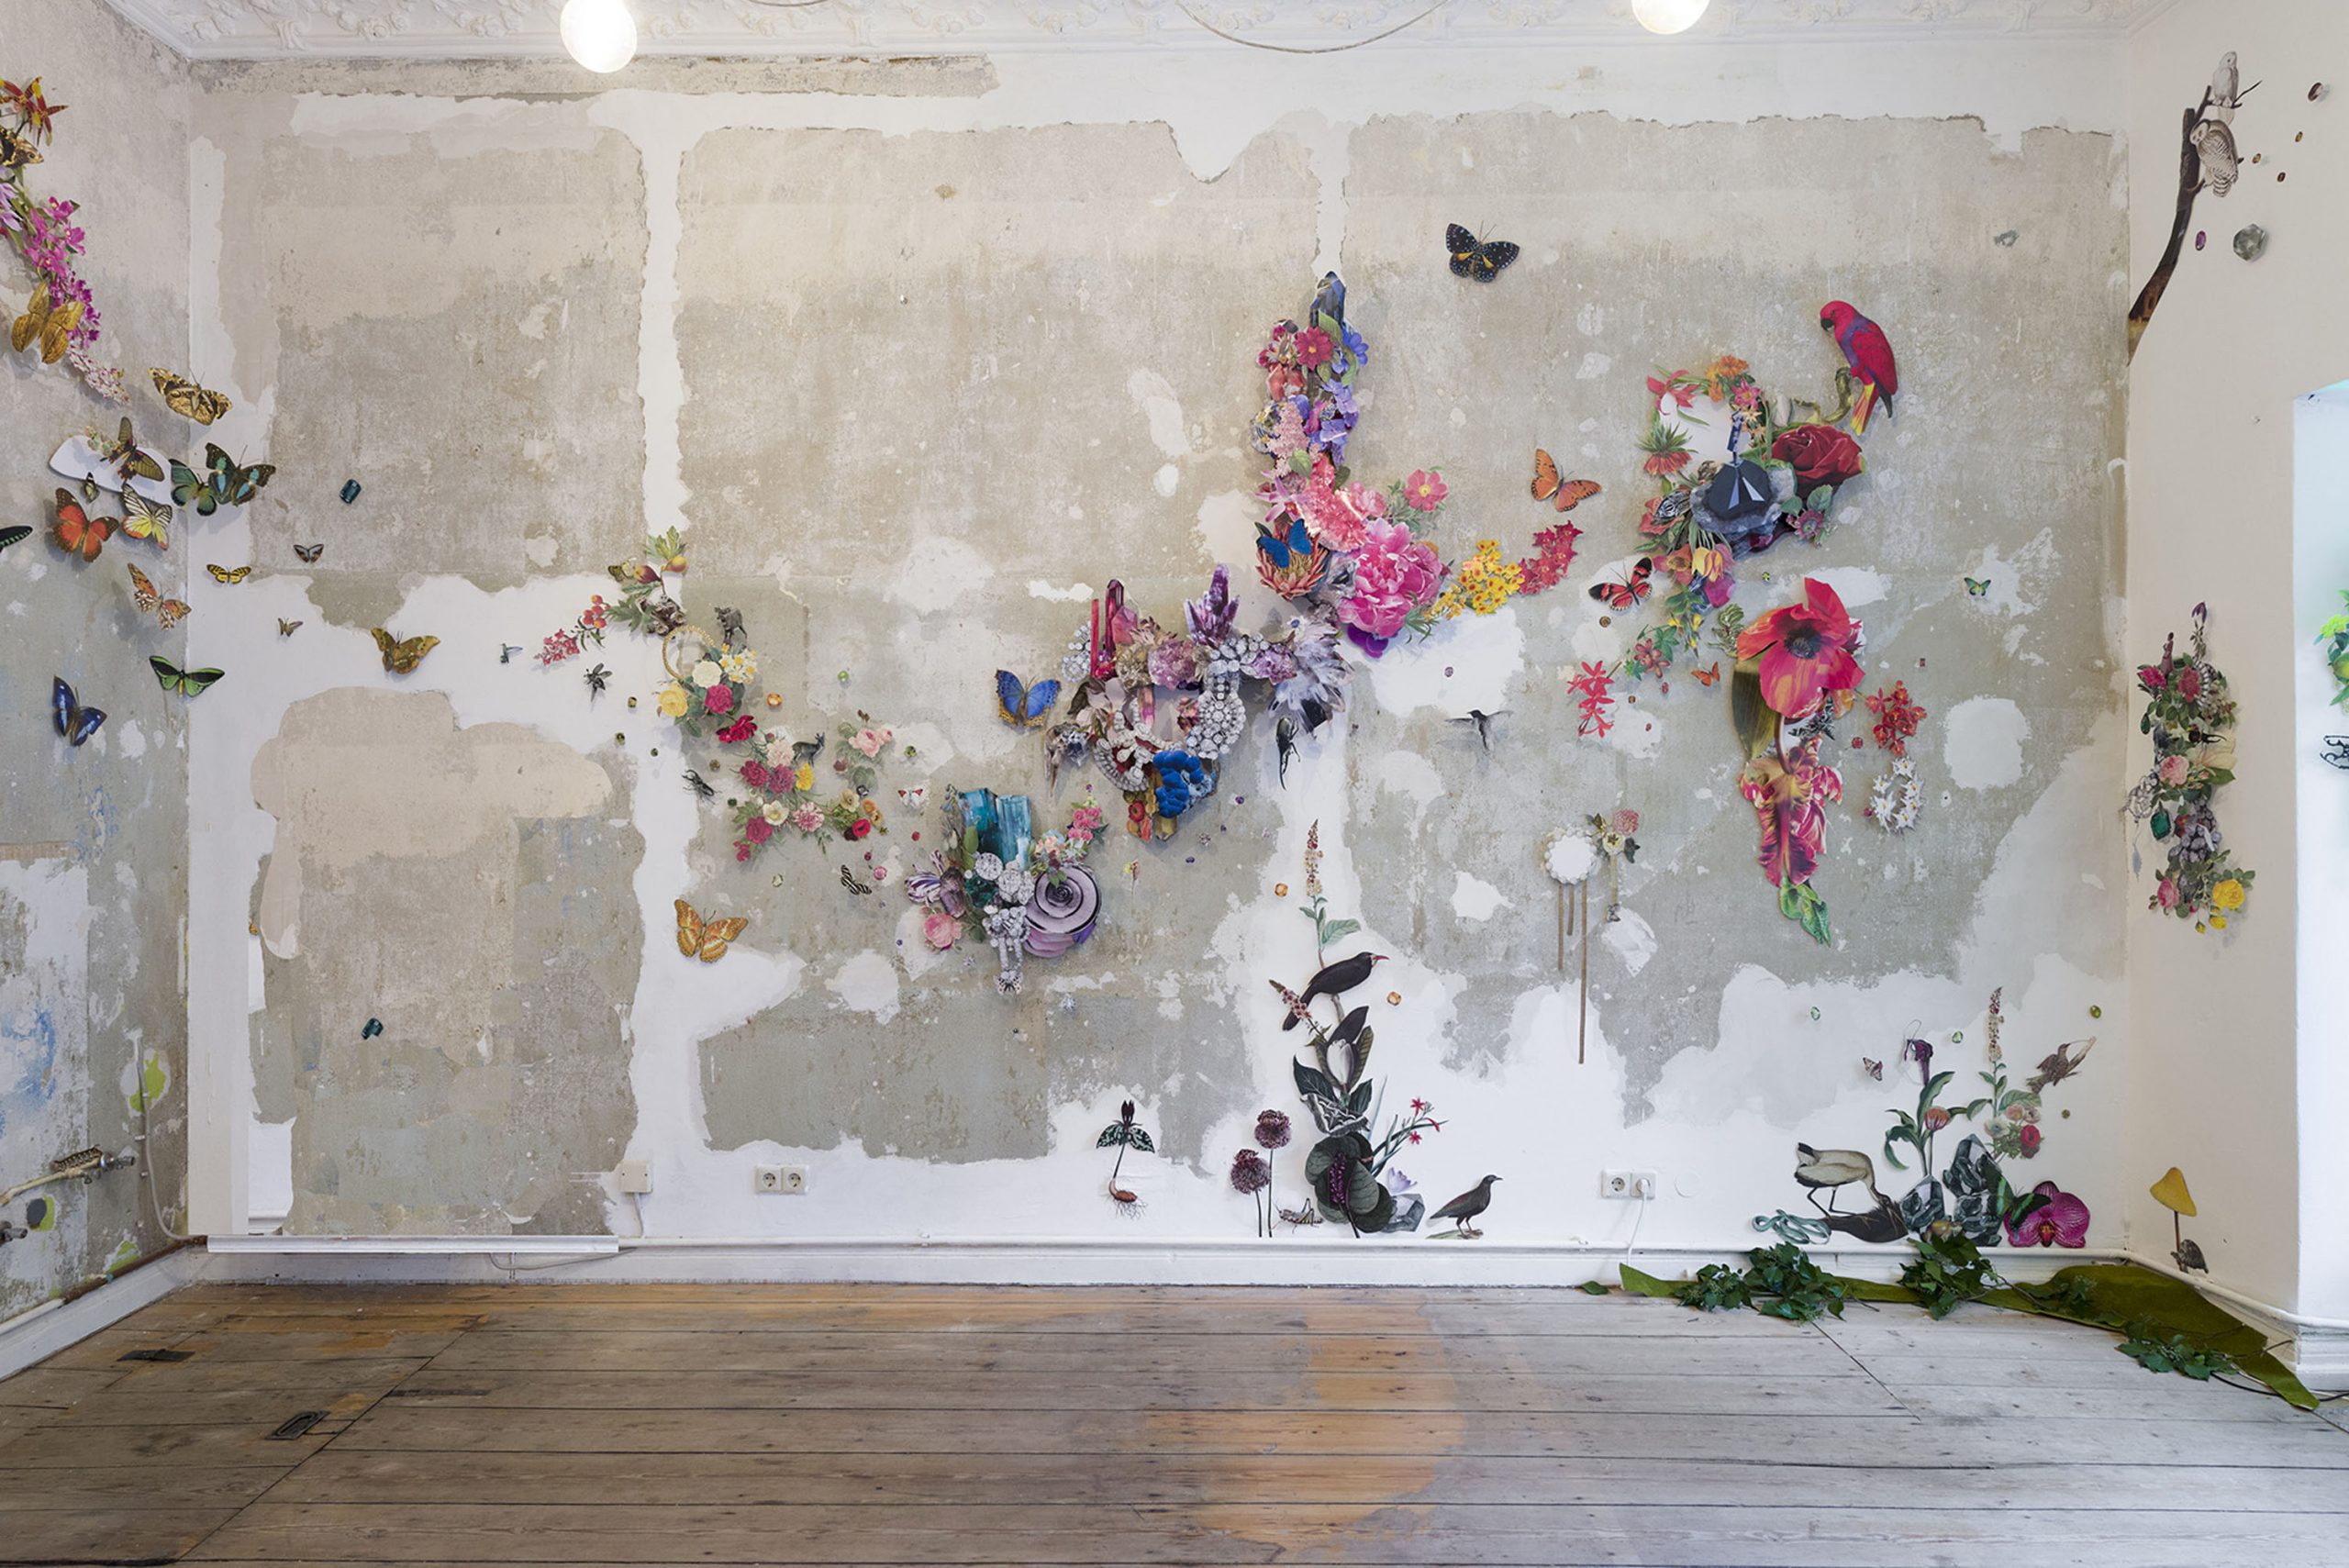 collage installation art featuring various biodiversity figures